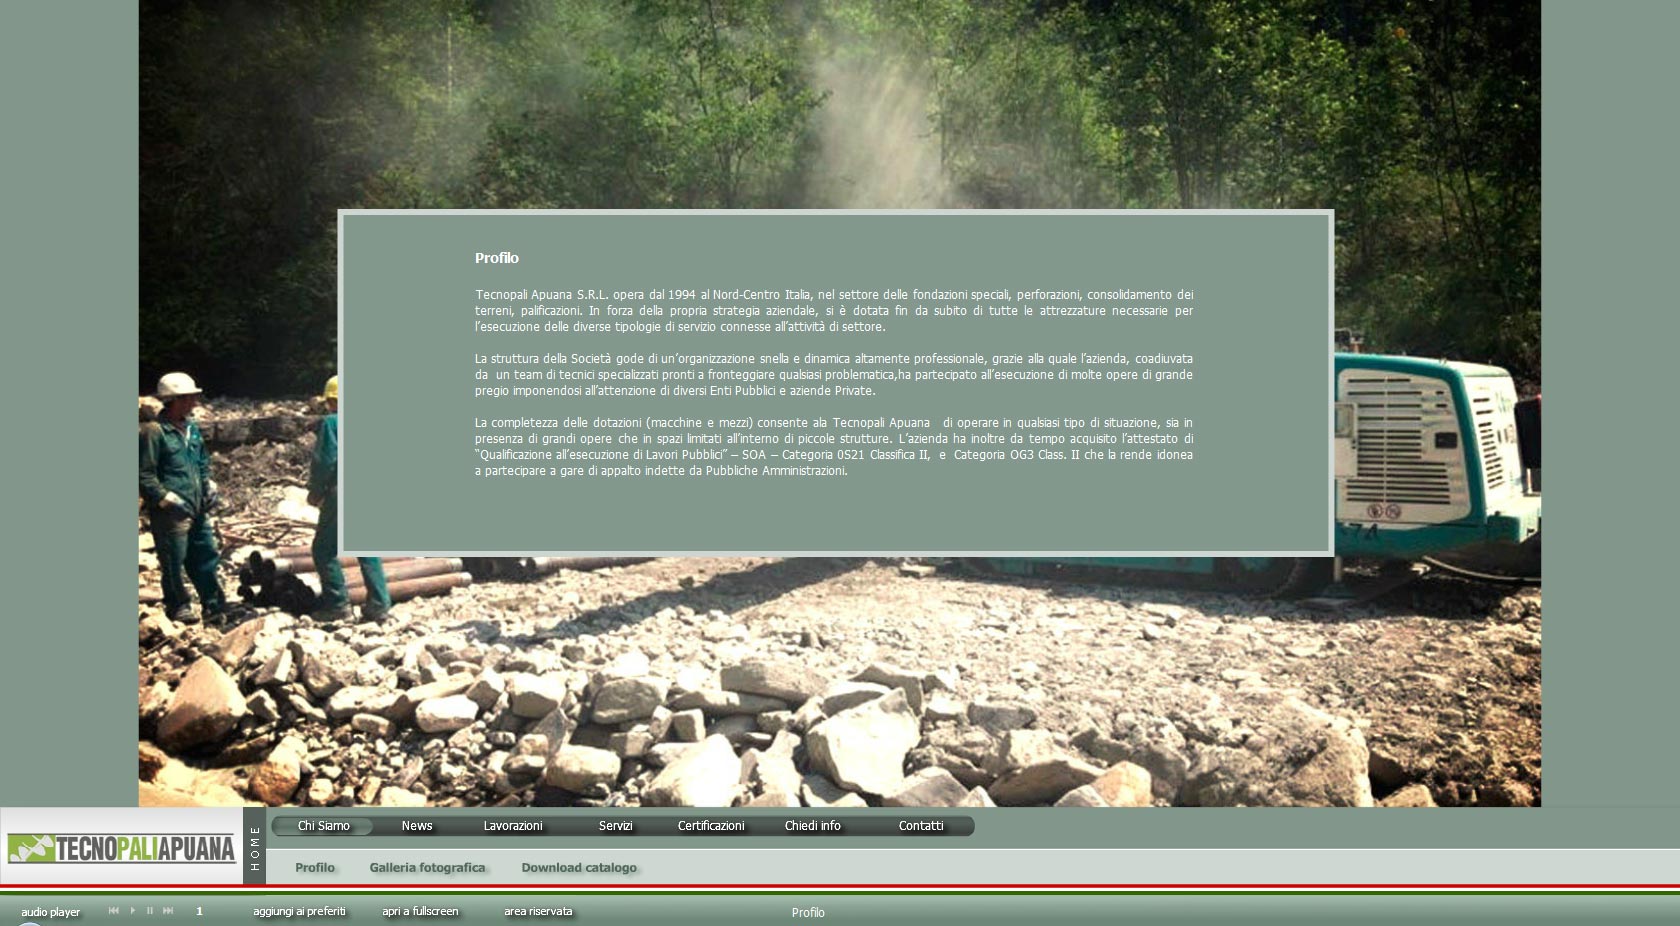 Tecnopali Apuana Website 2011